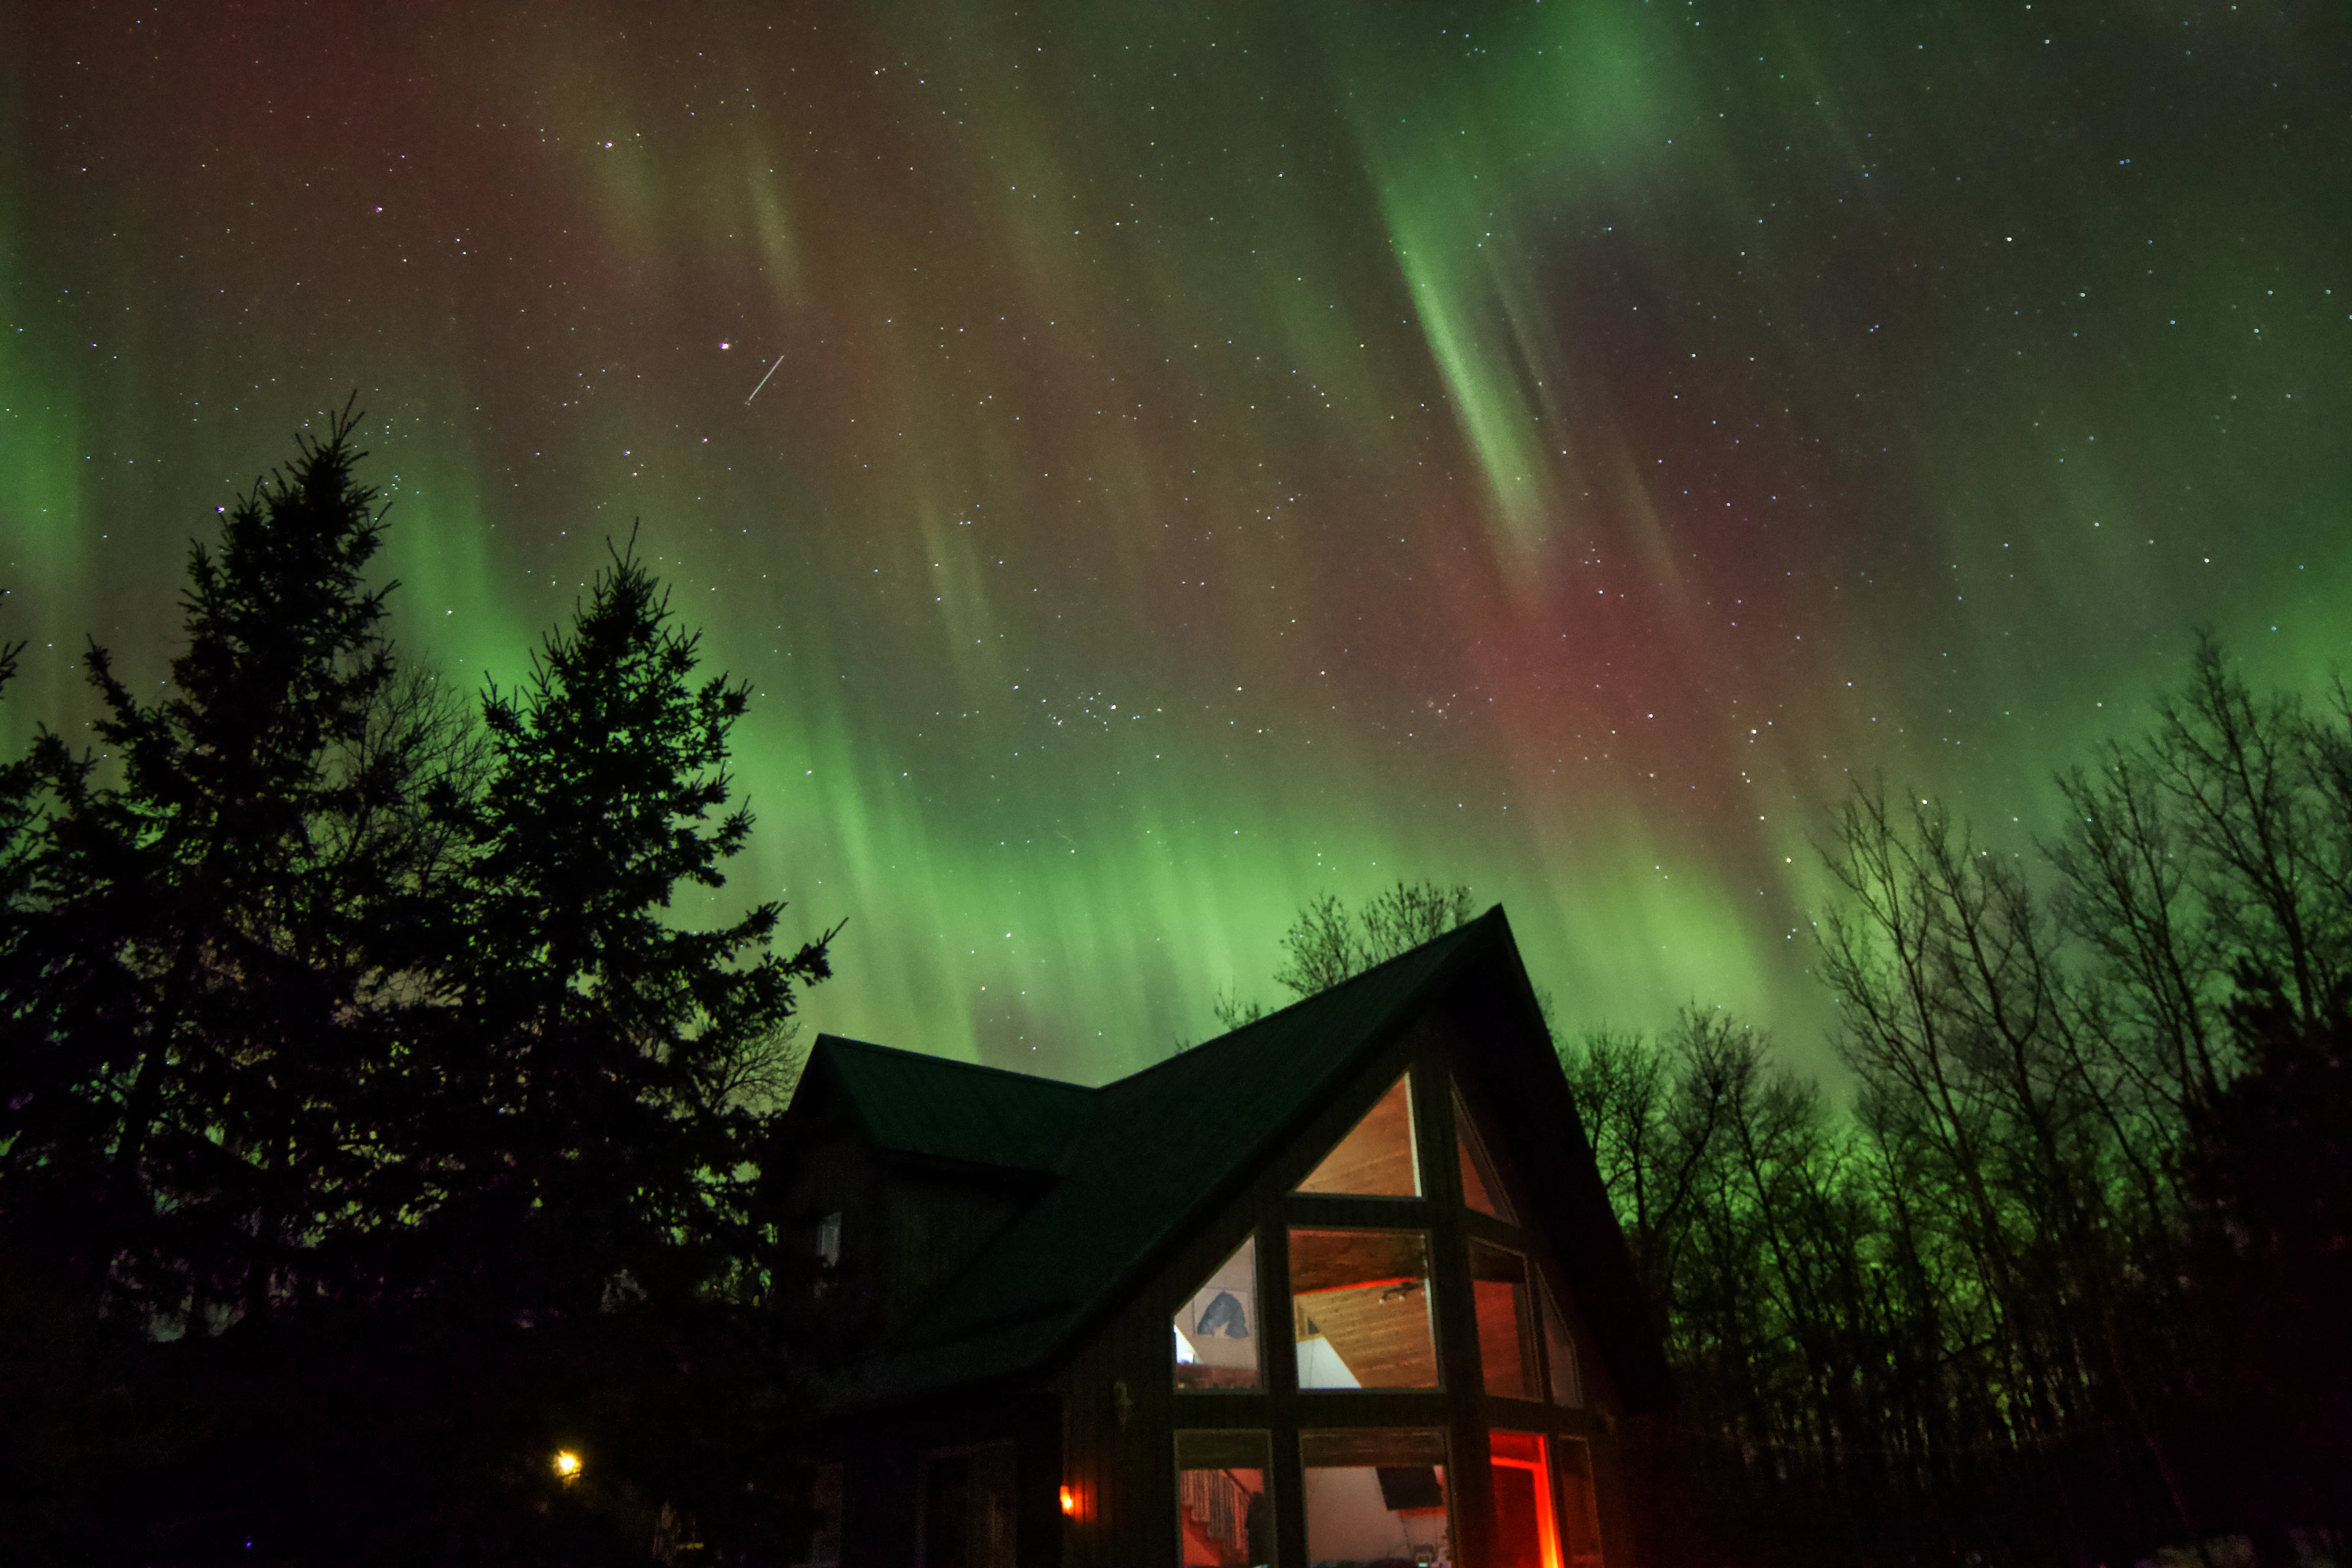 UGC - auroras - Dauphin Manitoba 36003760 - Cindy Mathe